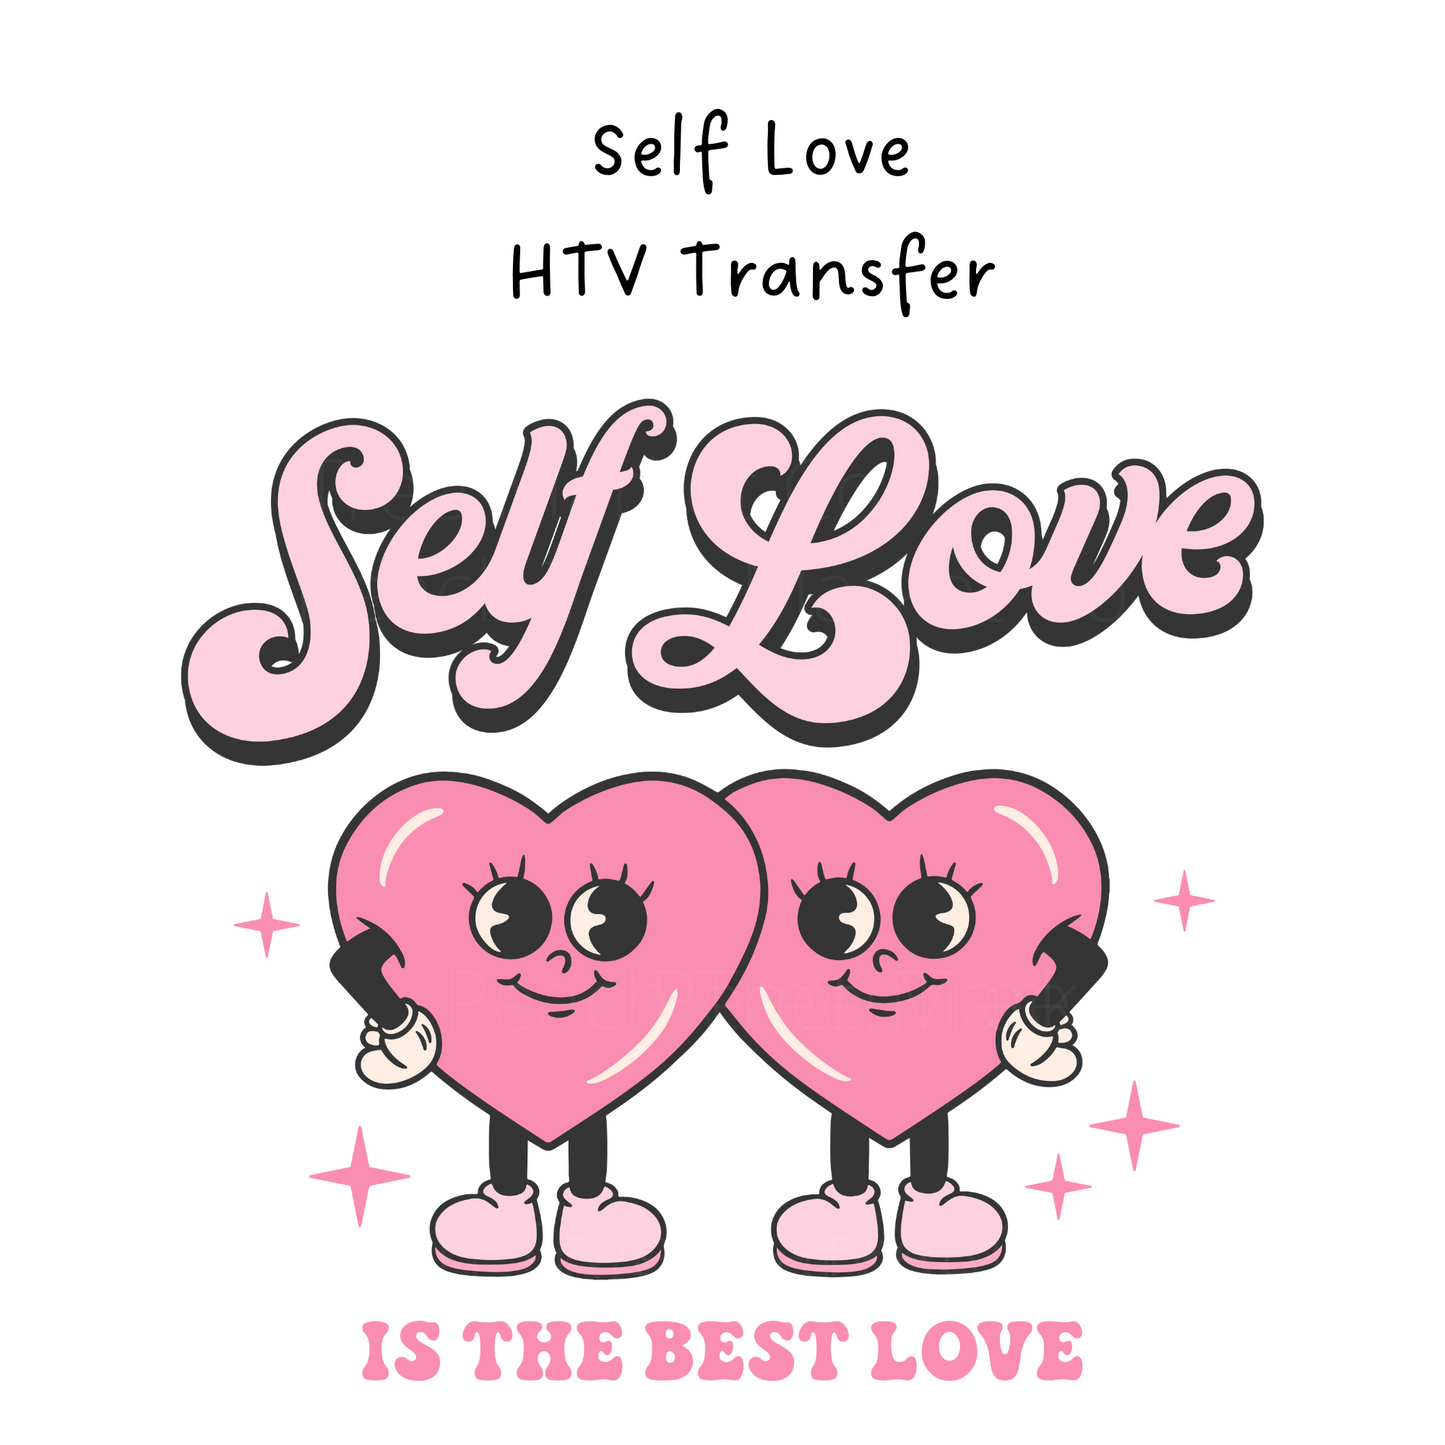 Self Love HTV Transfer